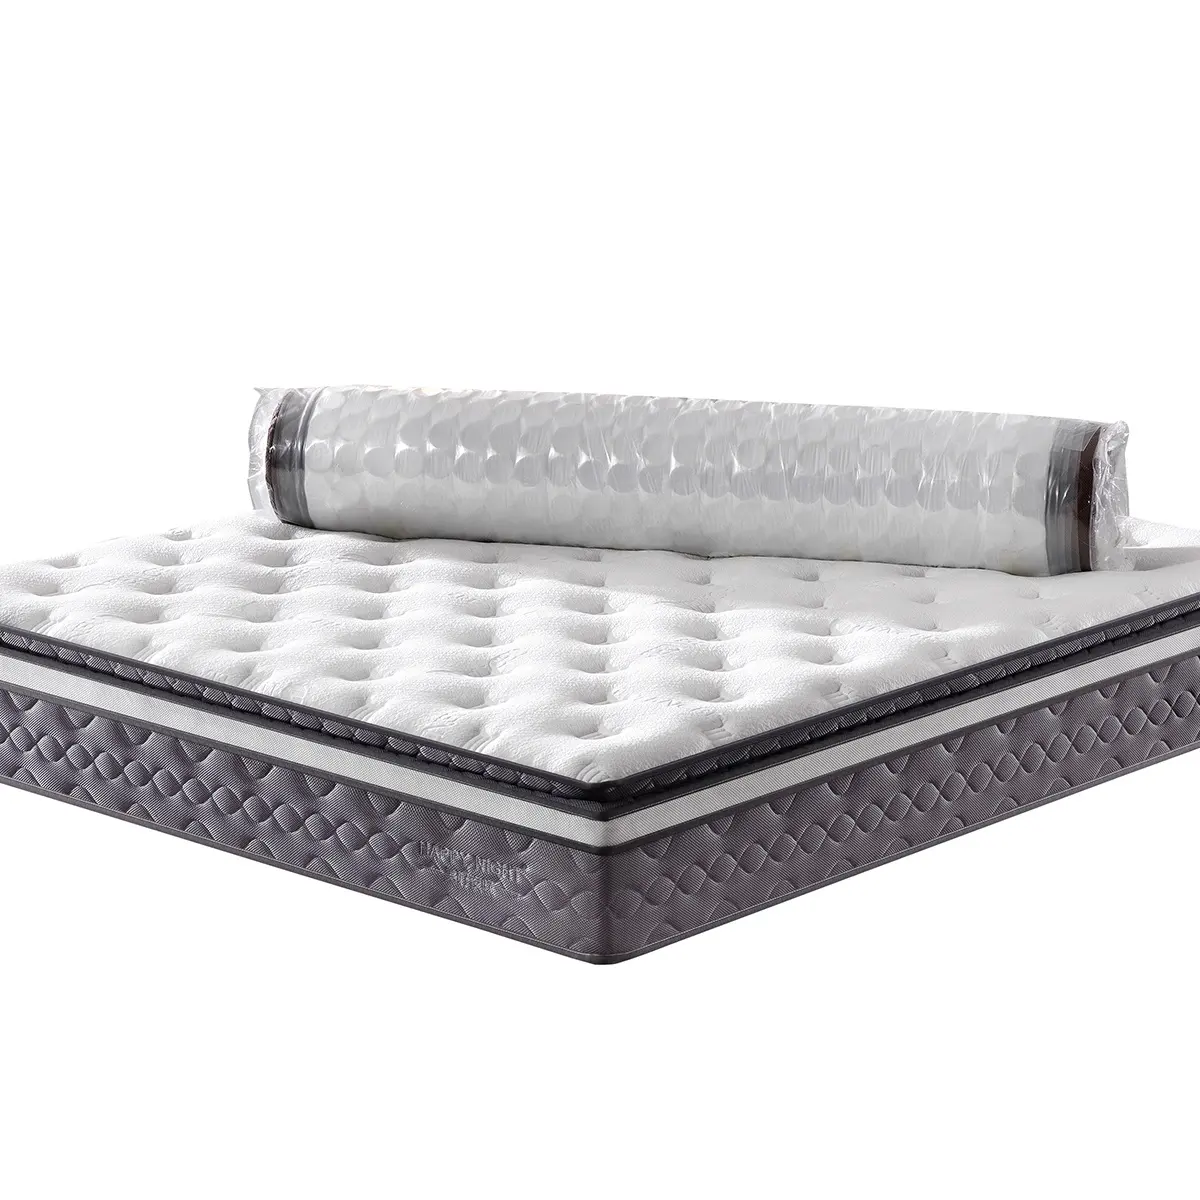 Hypo-allergenic sleep well hotel bed mattress manufacturers spring mattress wholesale orthopedic mattress